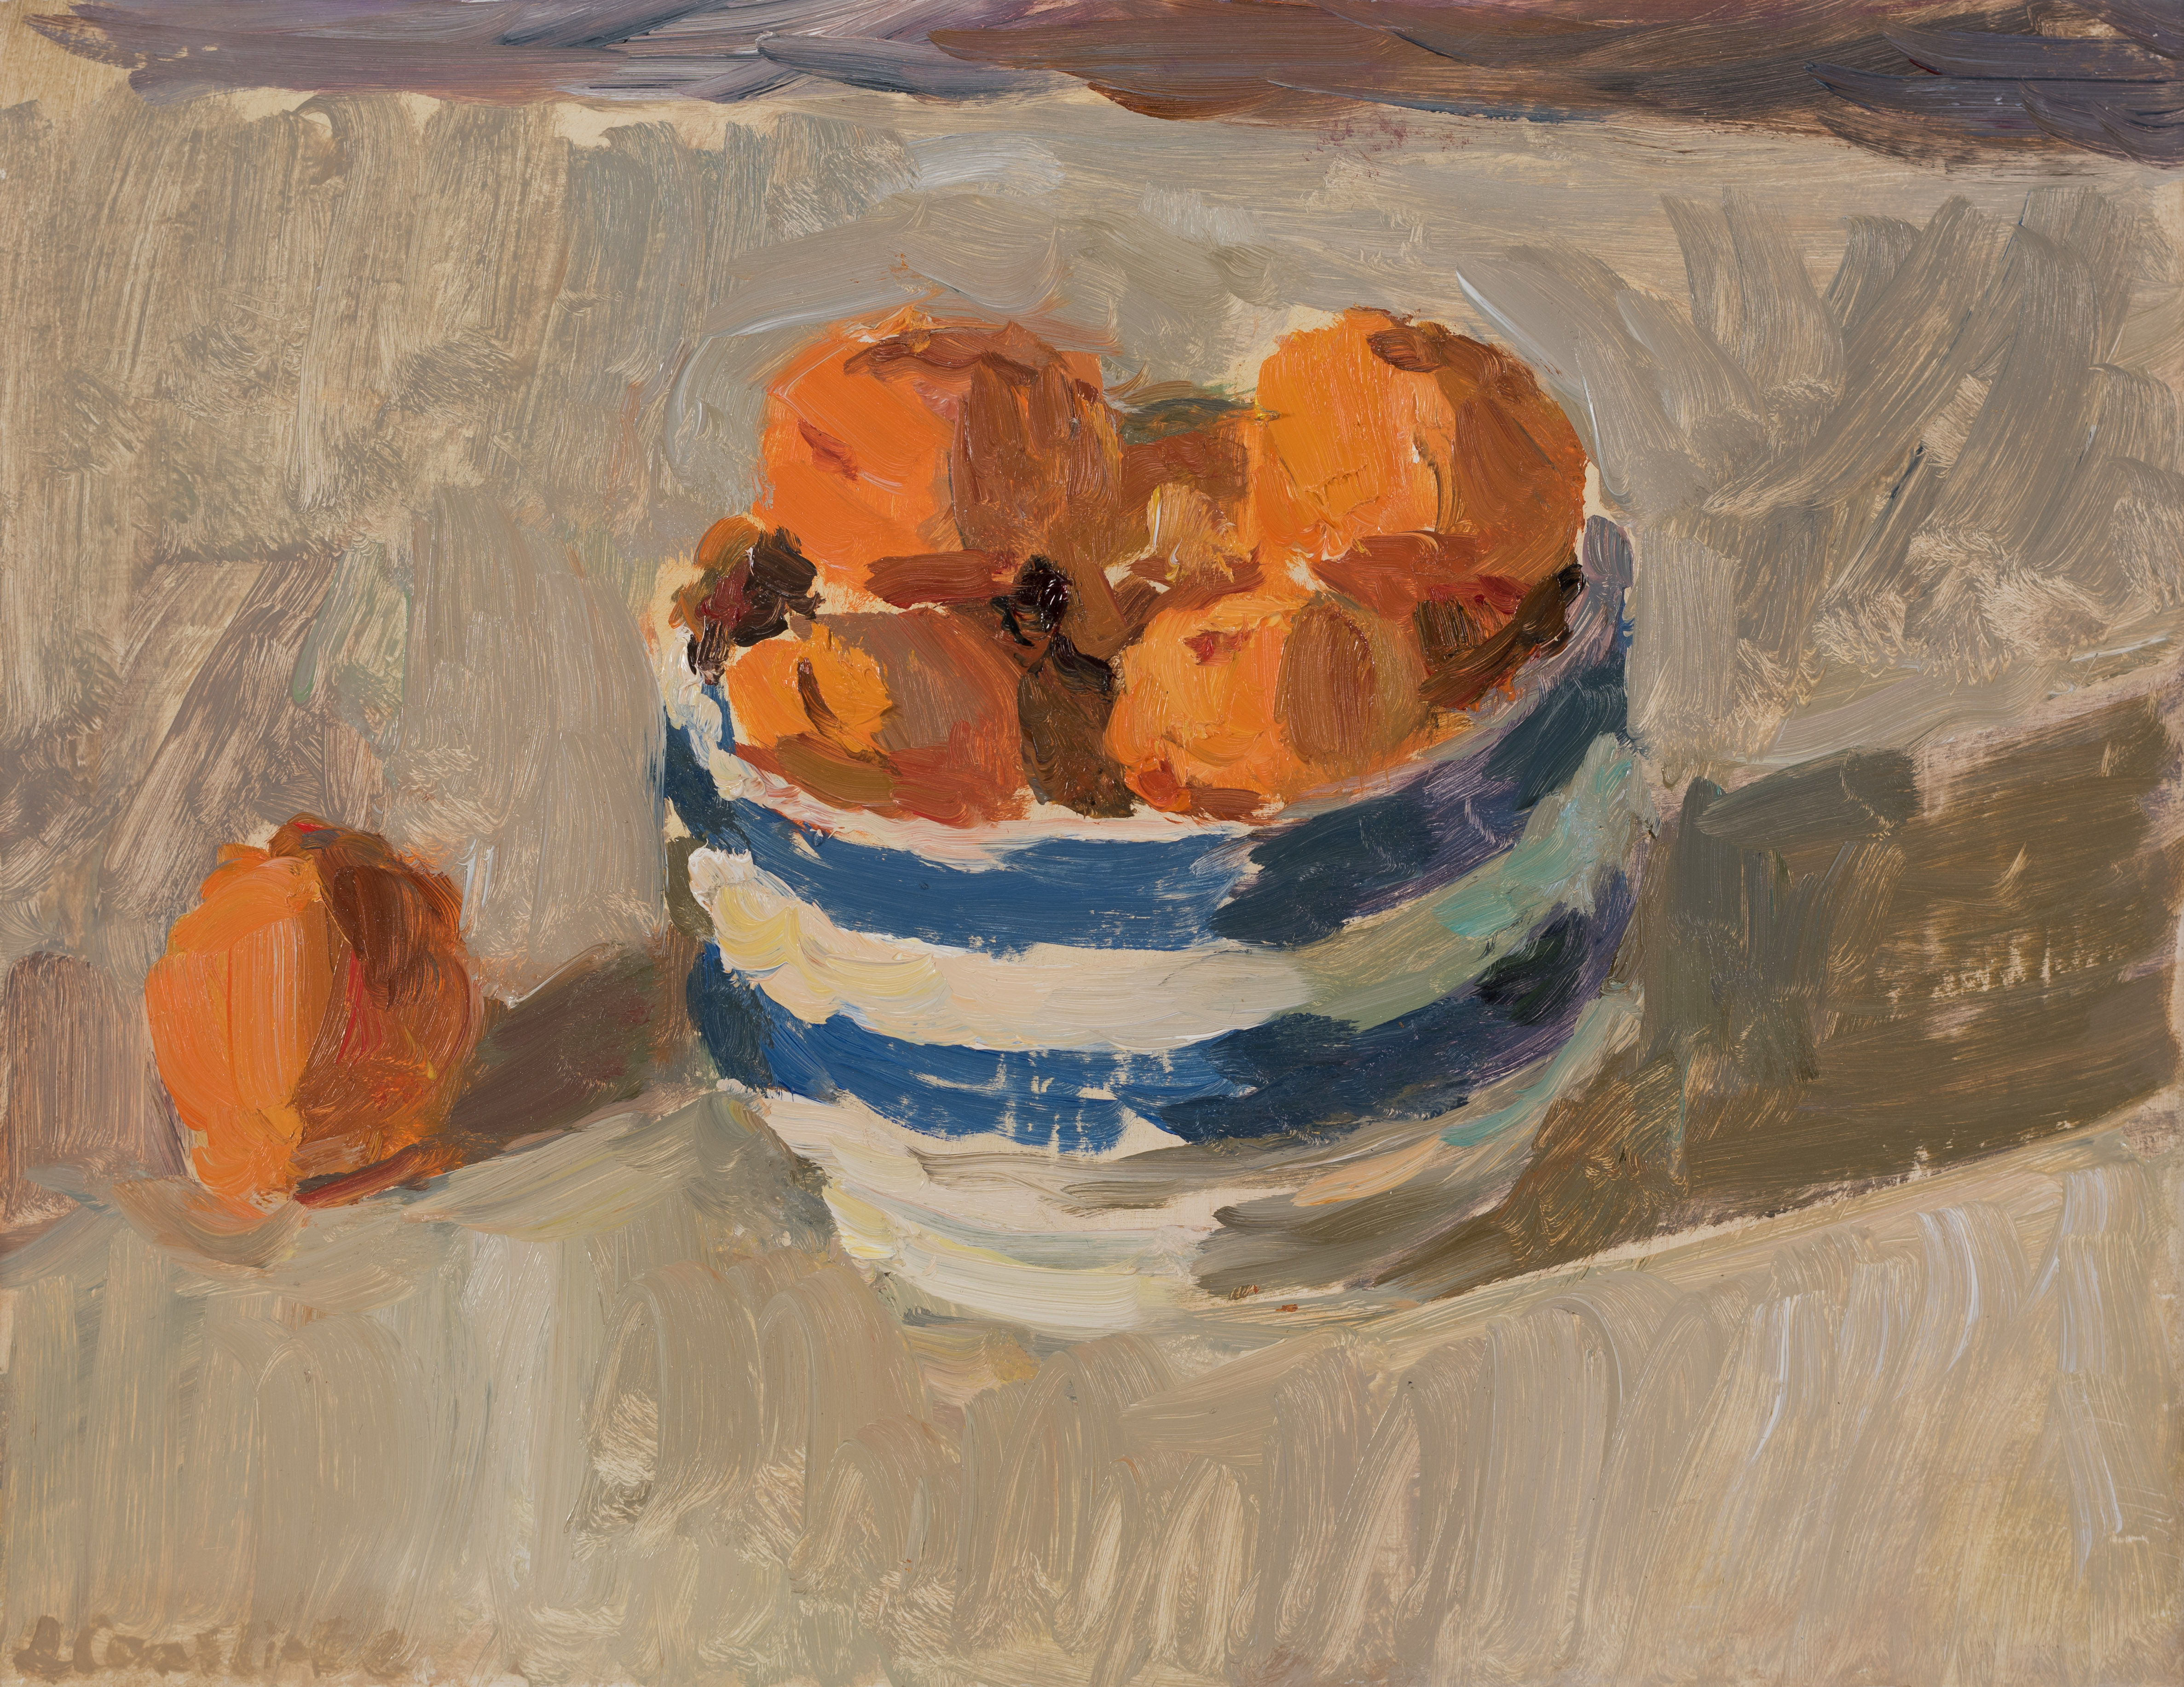 Digital Print: Apricots in a Striped Bowl